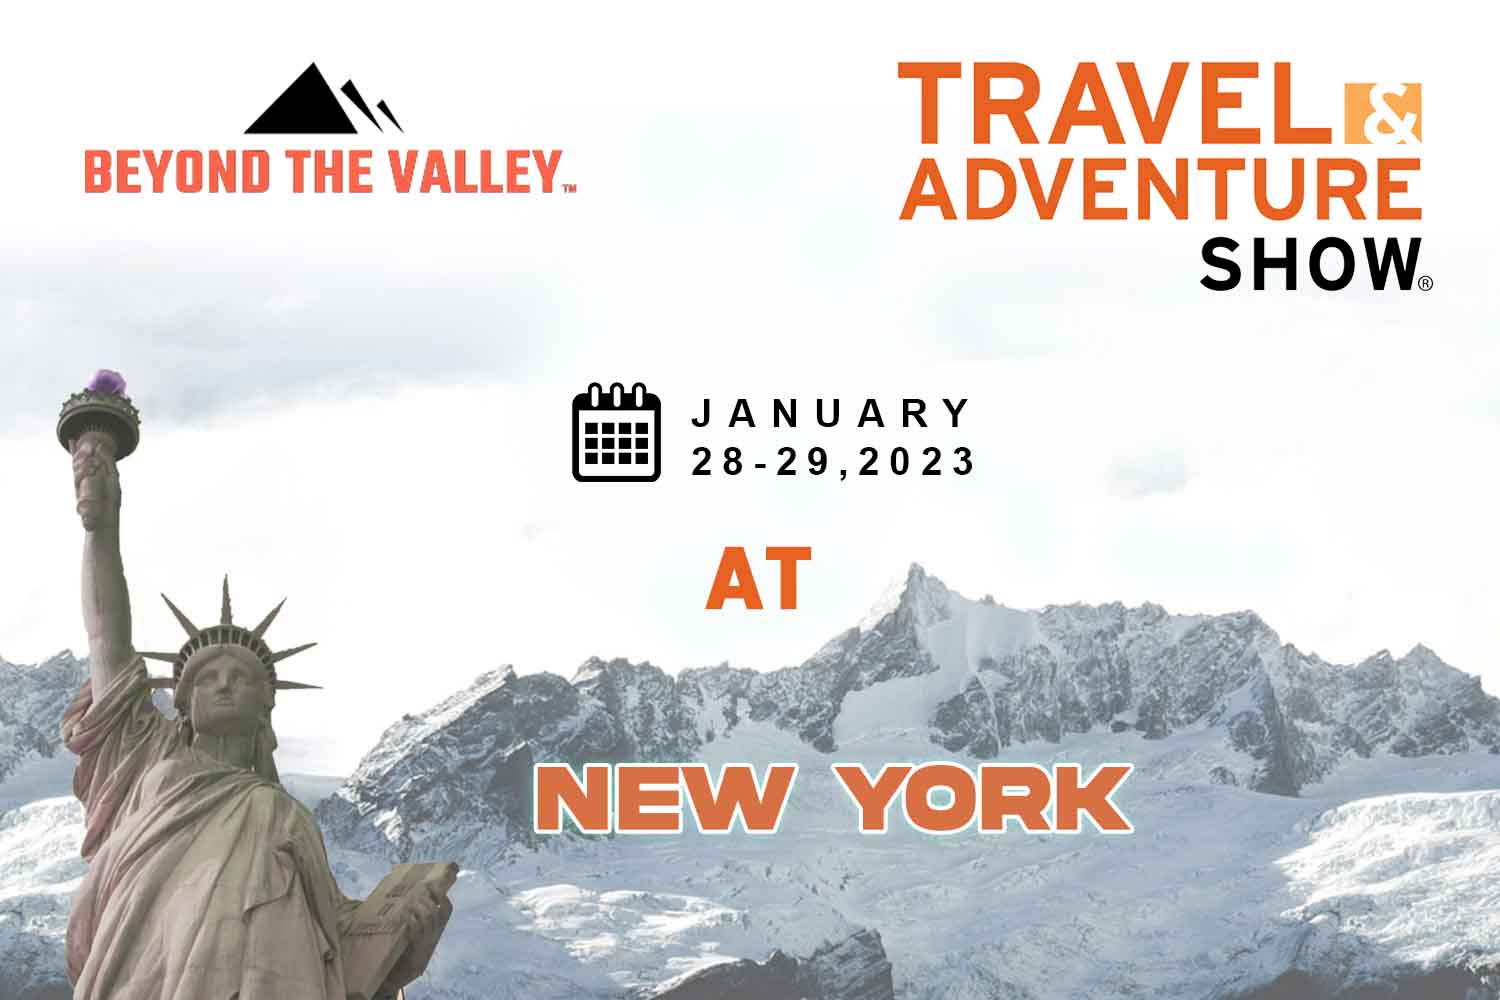 2023 new york travel & adventure show promo code